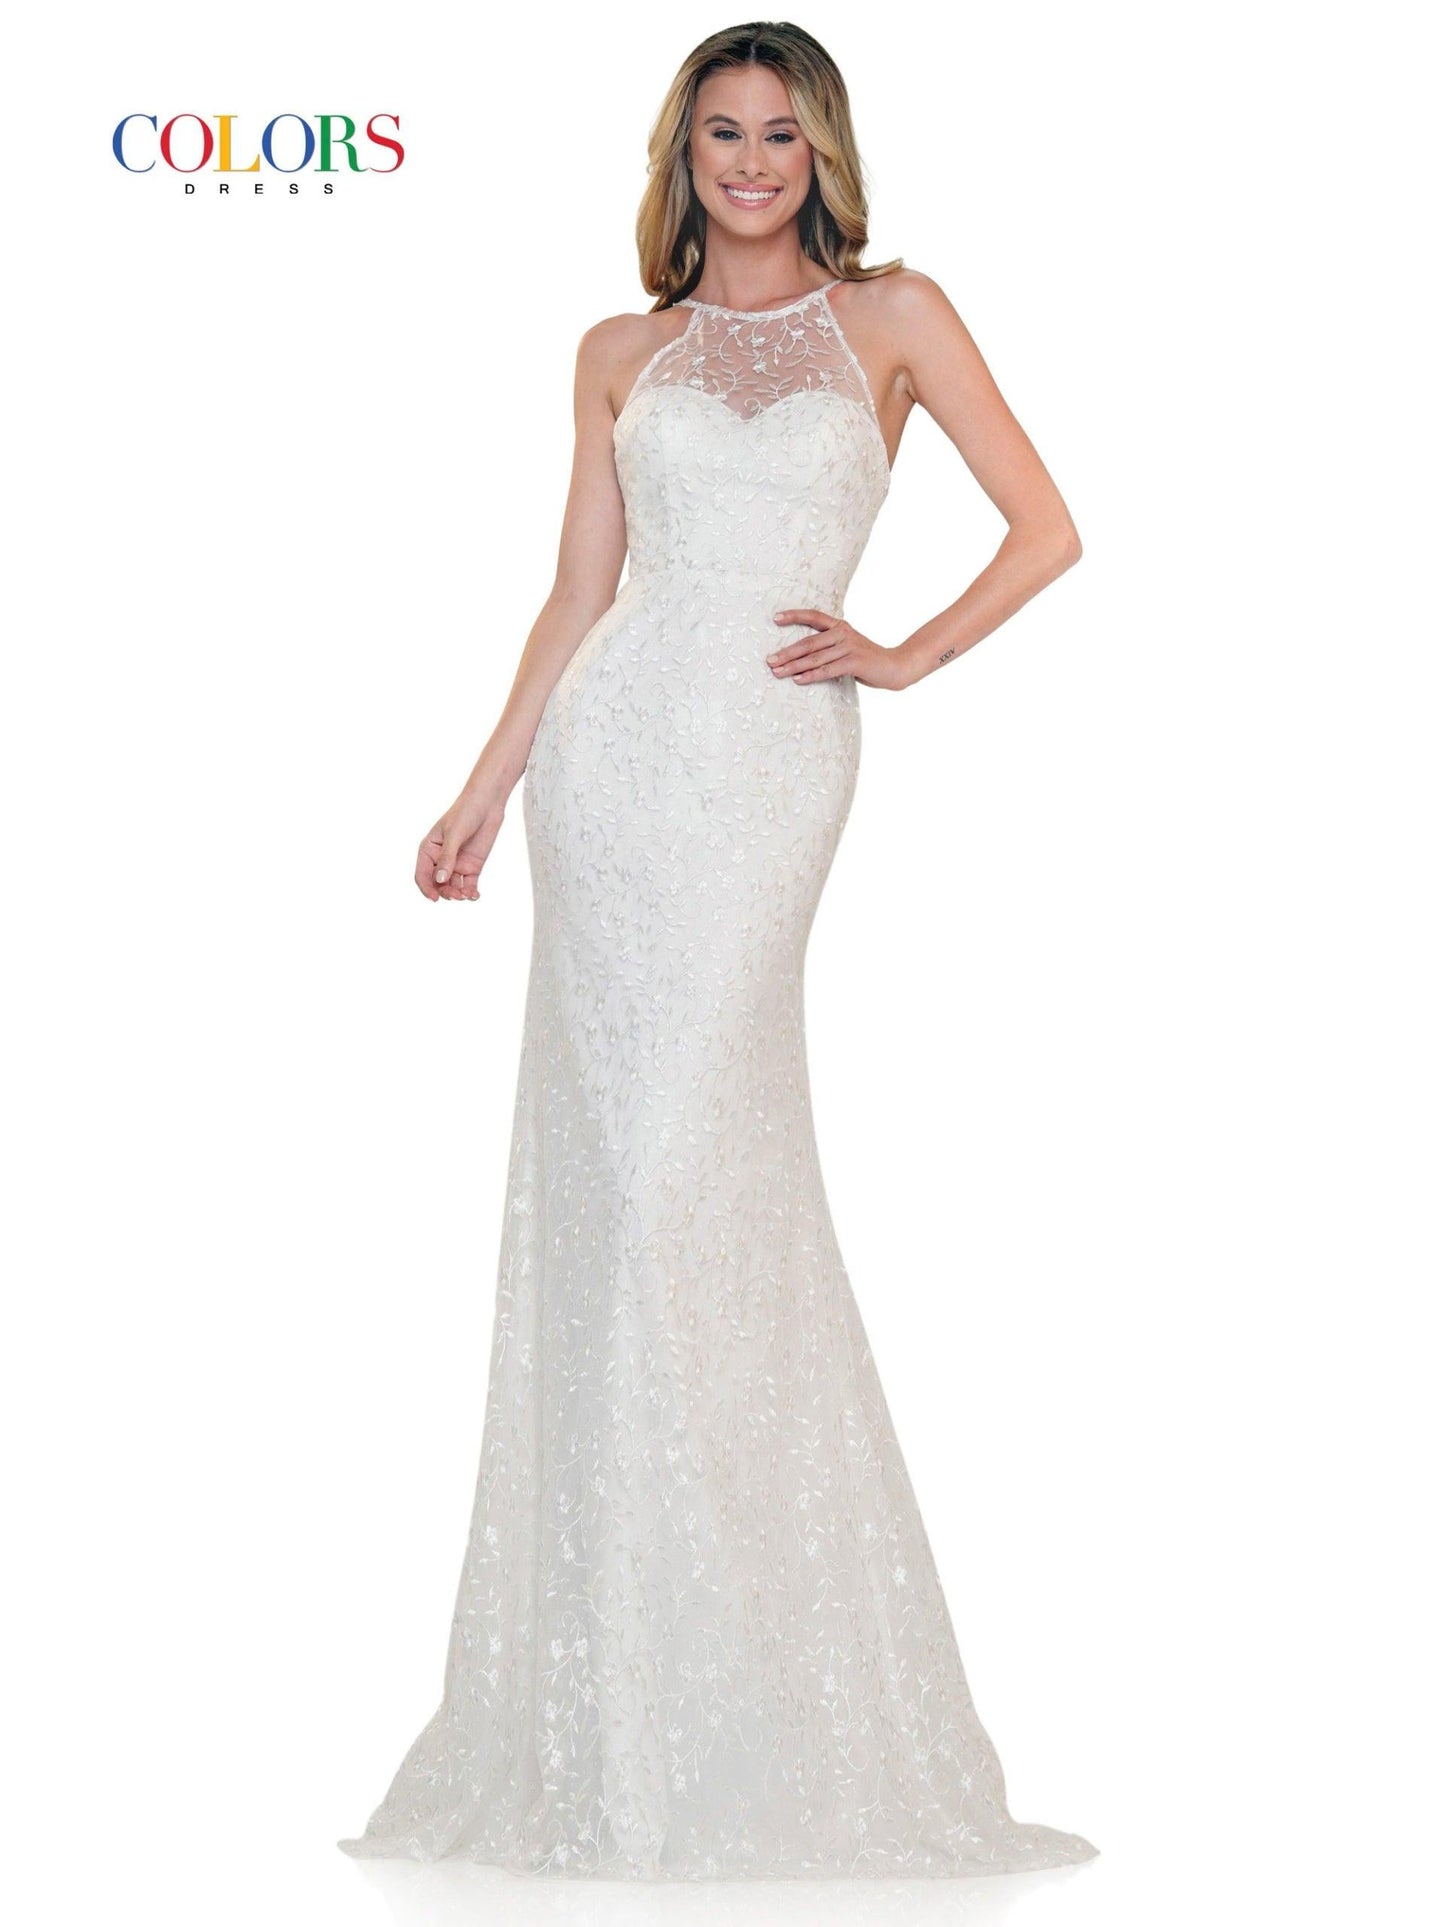 Colors Prom Long Formal Halter Dress 2698 - The Dress Outlet